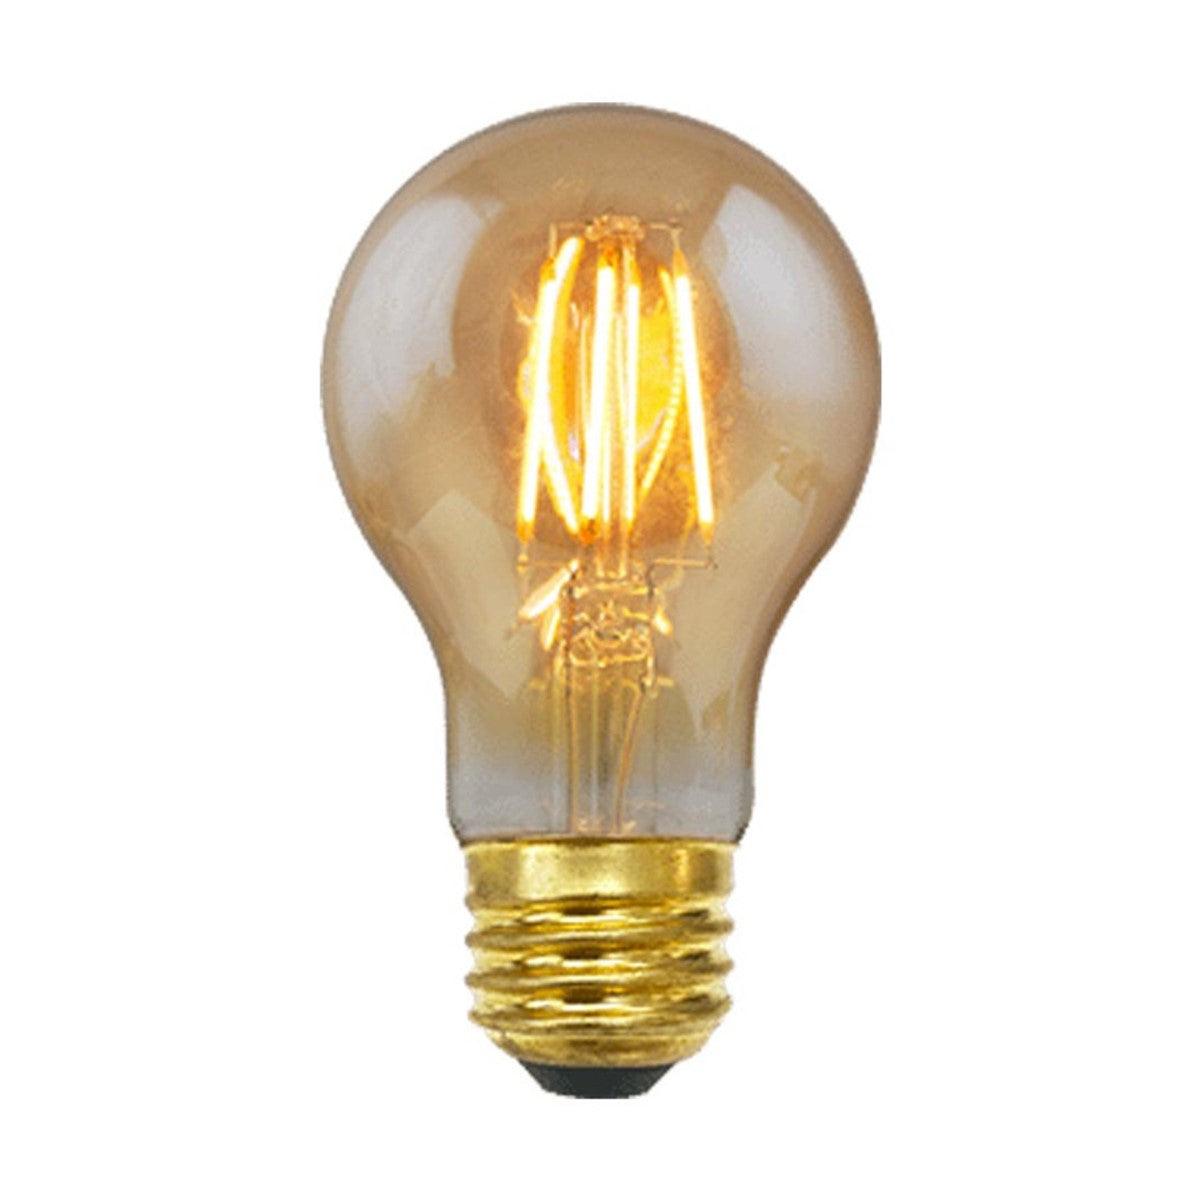 A19 LED Bulb, 5 Watt, 340 Lumens, 2000K, E26 Medium Base, Amber Finish